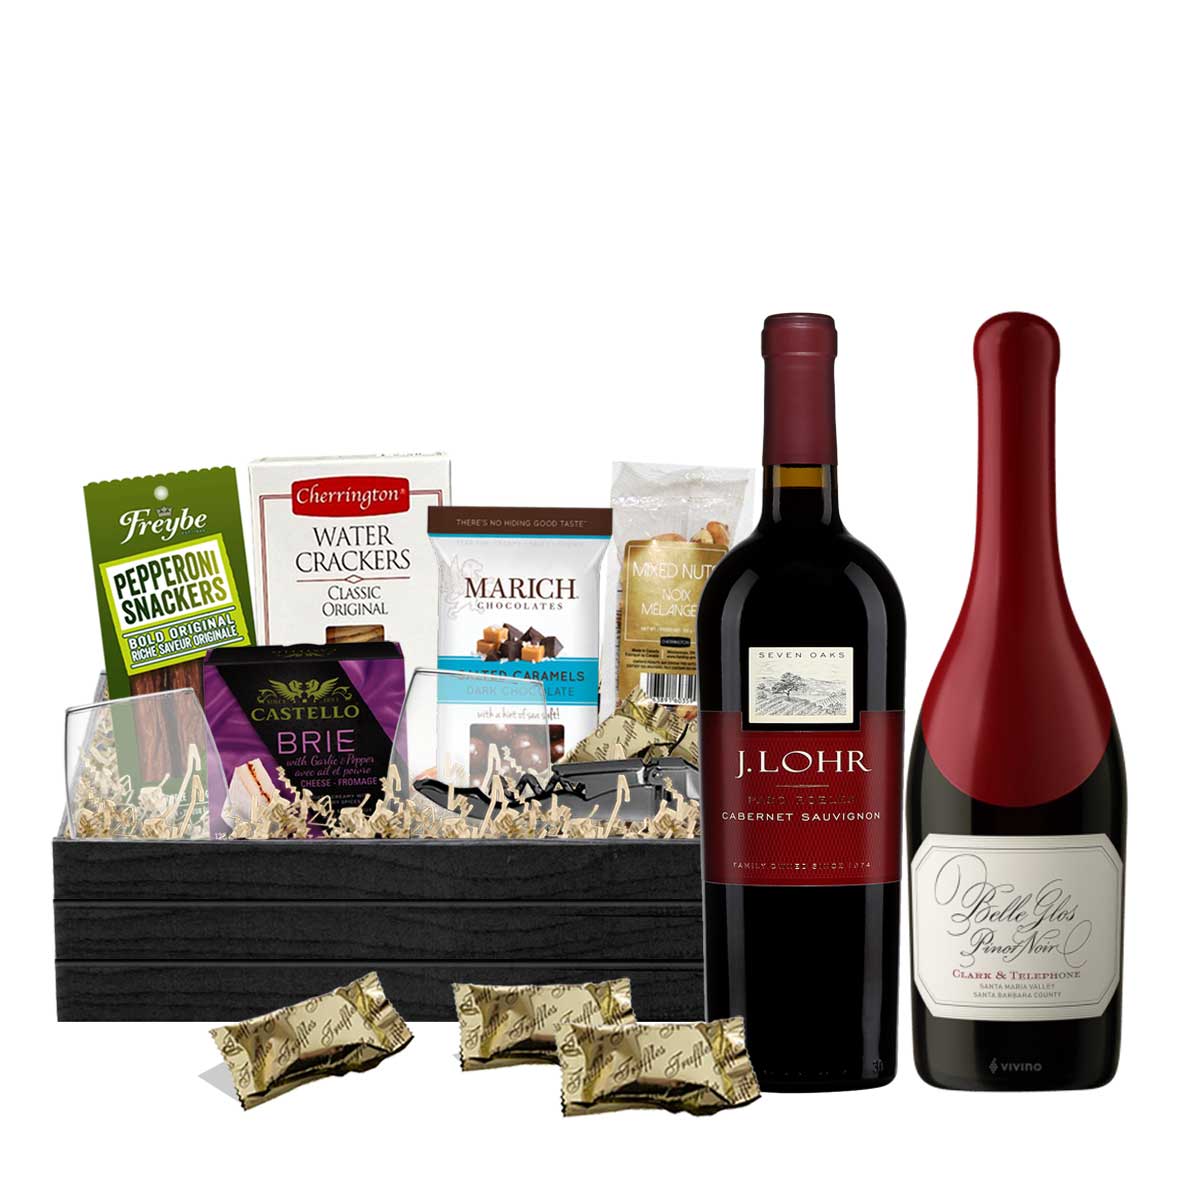 TAG Liquor Stores BC - J.Lohr Cabernet Sauvignon & Belle Glos Clark & Telephone Pinot Noir 750ml X 2 Gift Basket